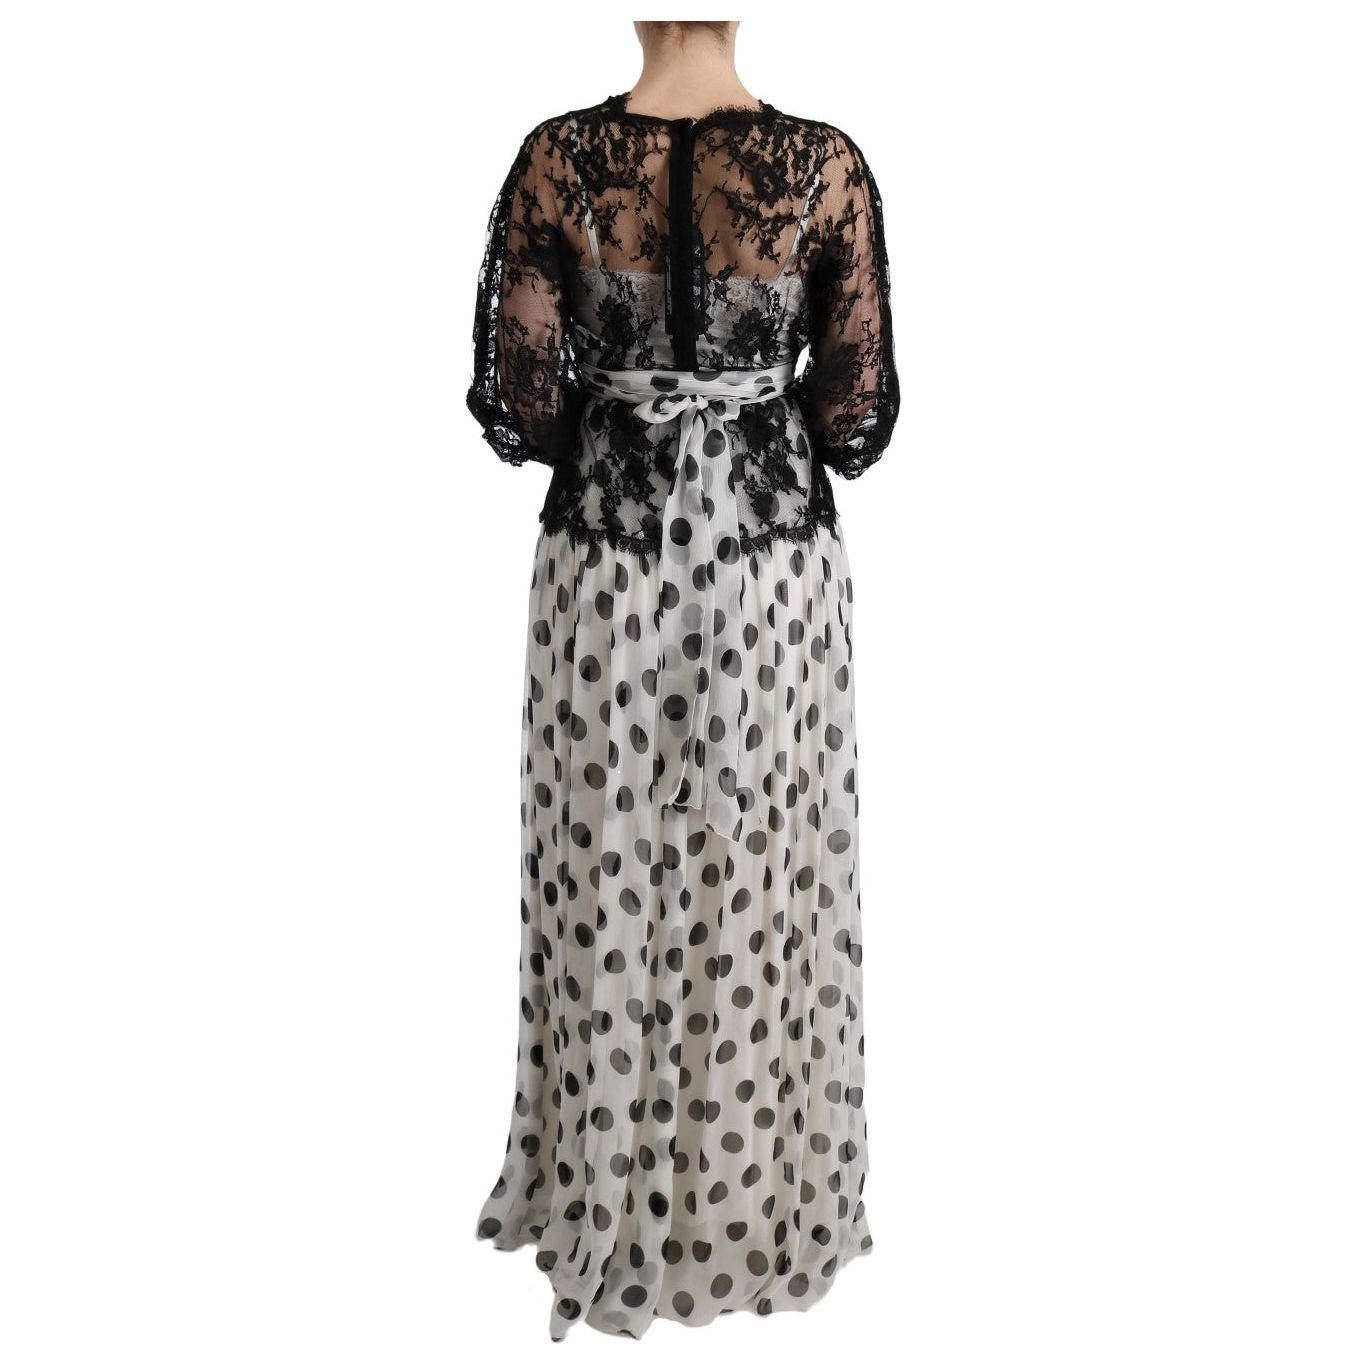 Dolce & Gabbana Elegant Polka Dotted Full Length Gown black-white-polka-dotted-floral-dress 445584-black-white-polka-dotted-floral-dress-2.jpg